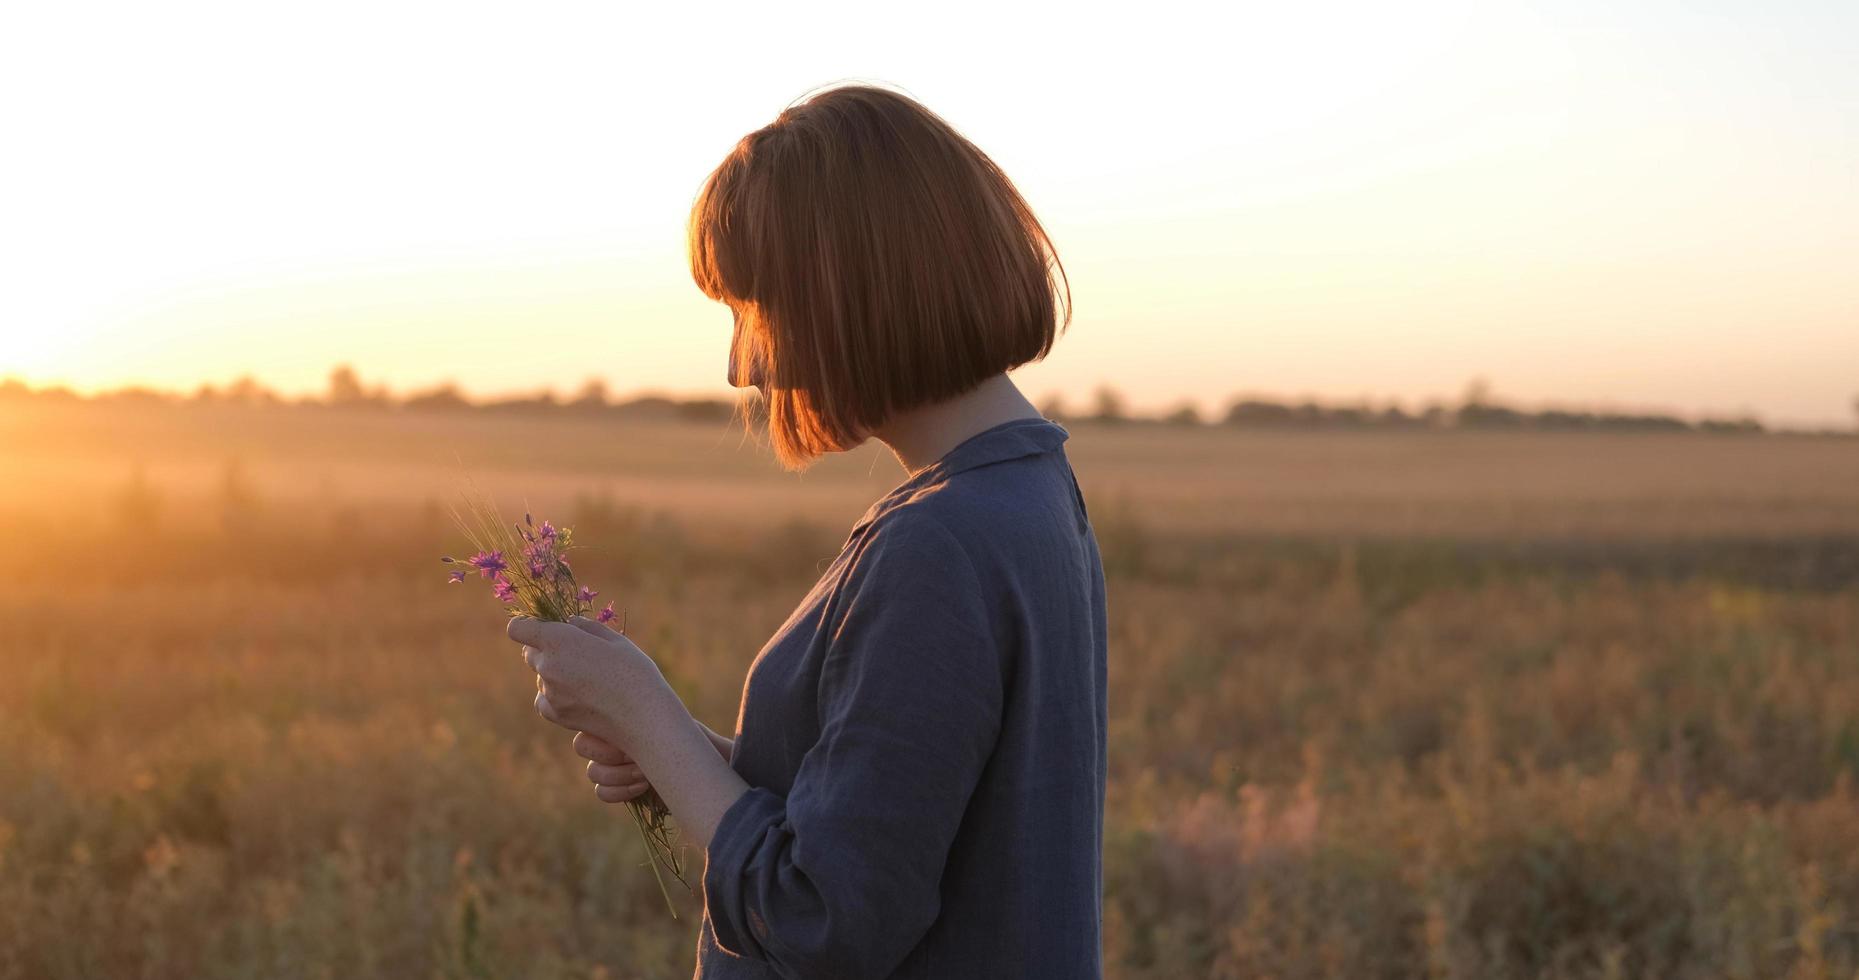 jong roodharige vrouw in mooi boho jurk ontspannende in de veld- gedurende mistig zonsondergang, vrouw buitenshuis met boeket in handen foto